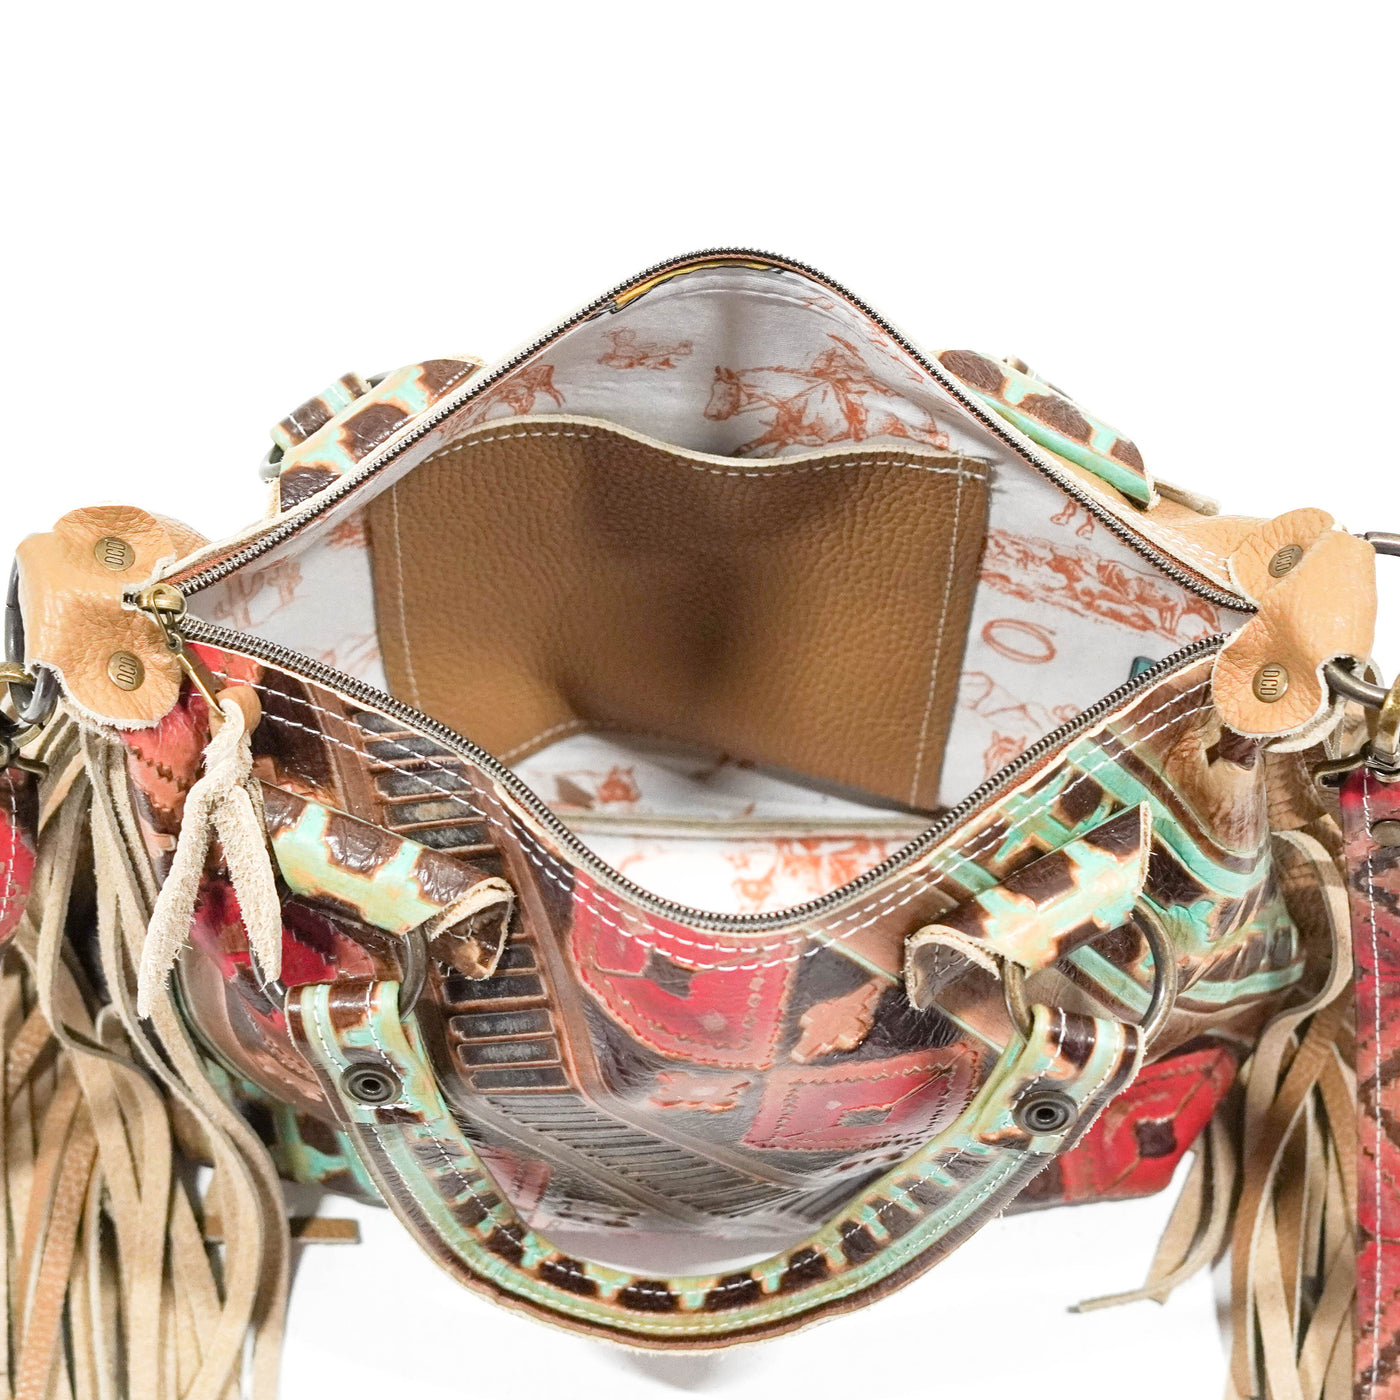 Annie - All Embossed w/ Santa Fe Navajo-Annie-Western-Cowhide-Bags-Handmade-Products-Gifts-Dancing Cactus Designs